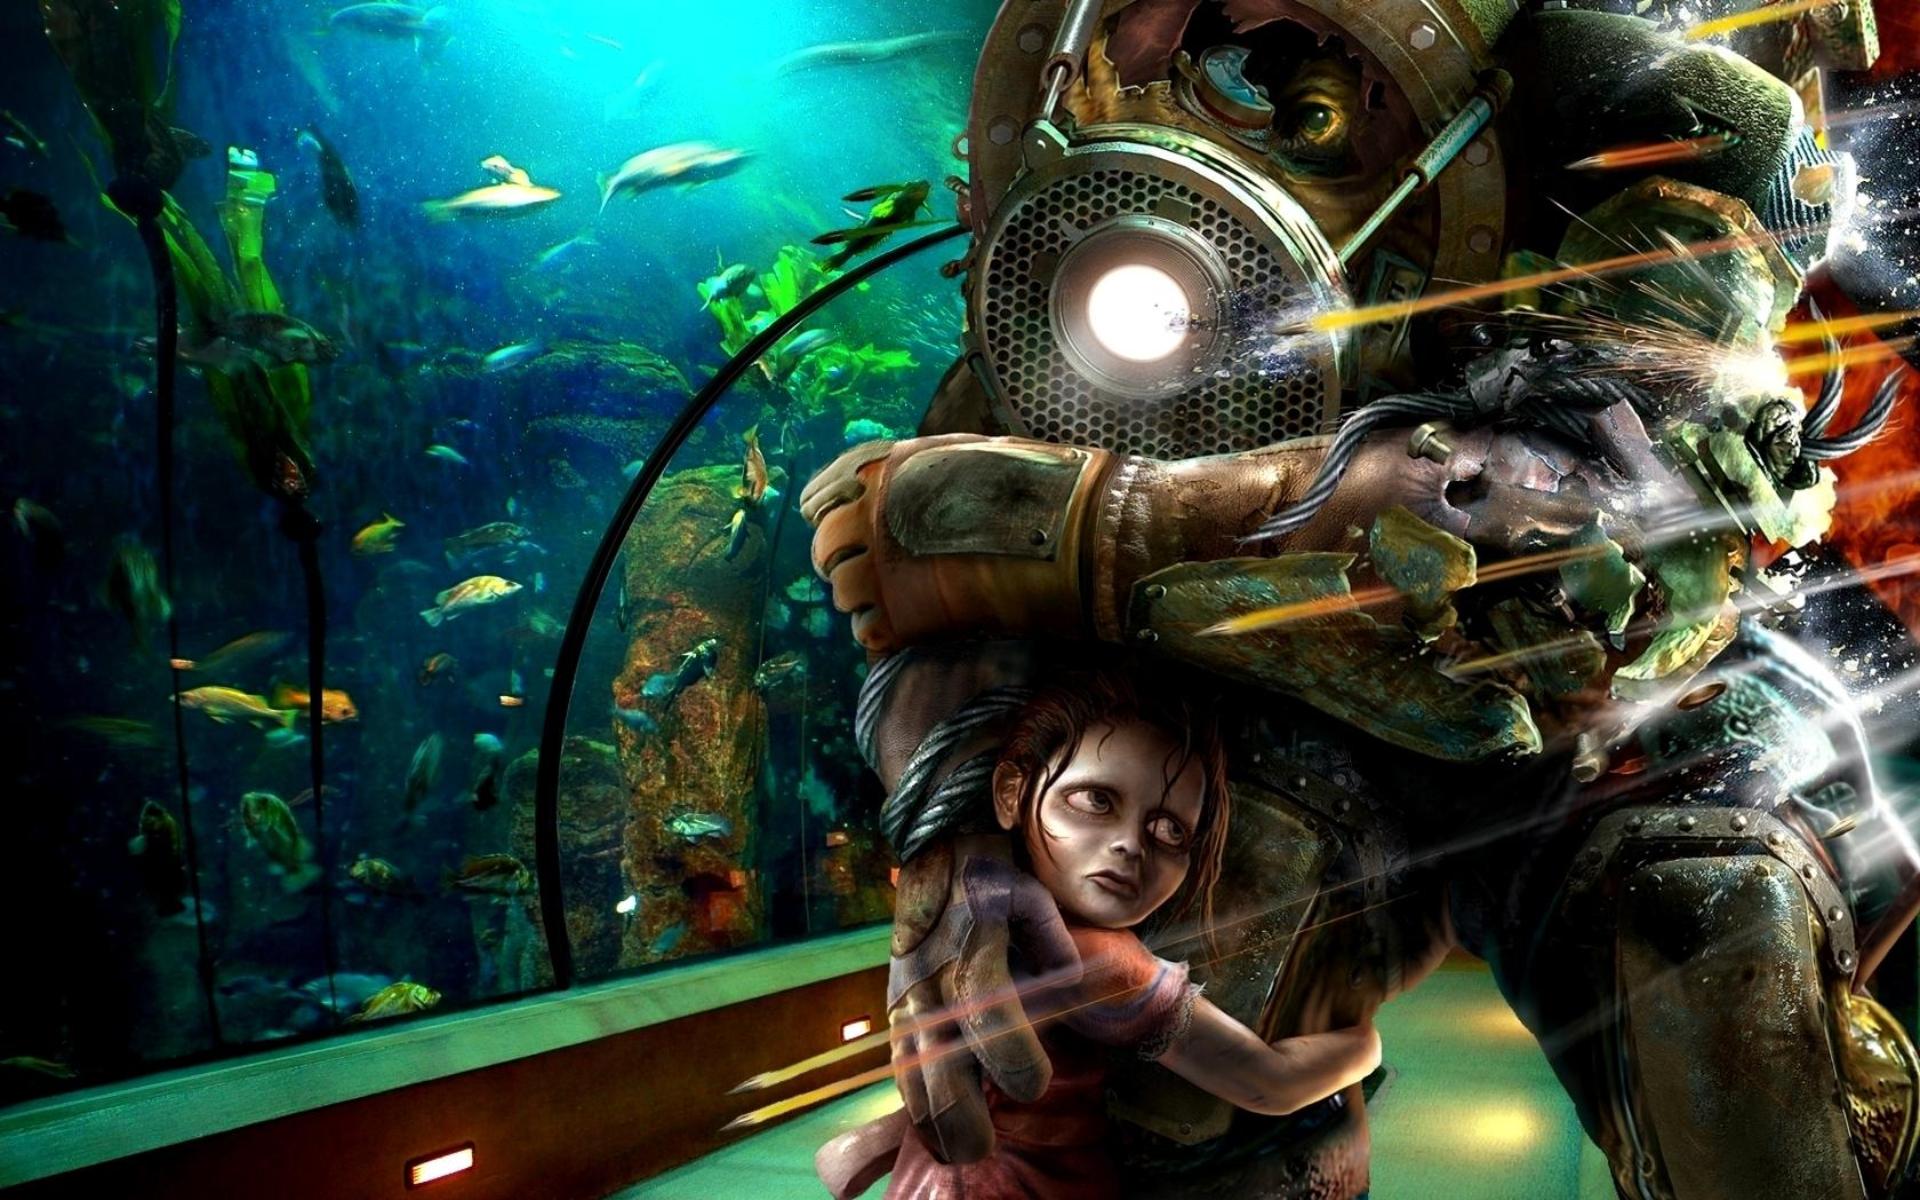 Video Game Bioshock Wallpaper